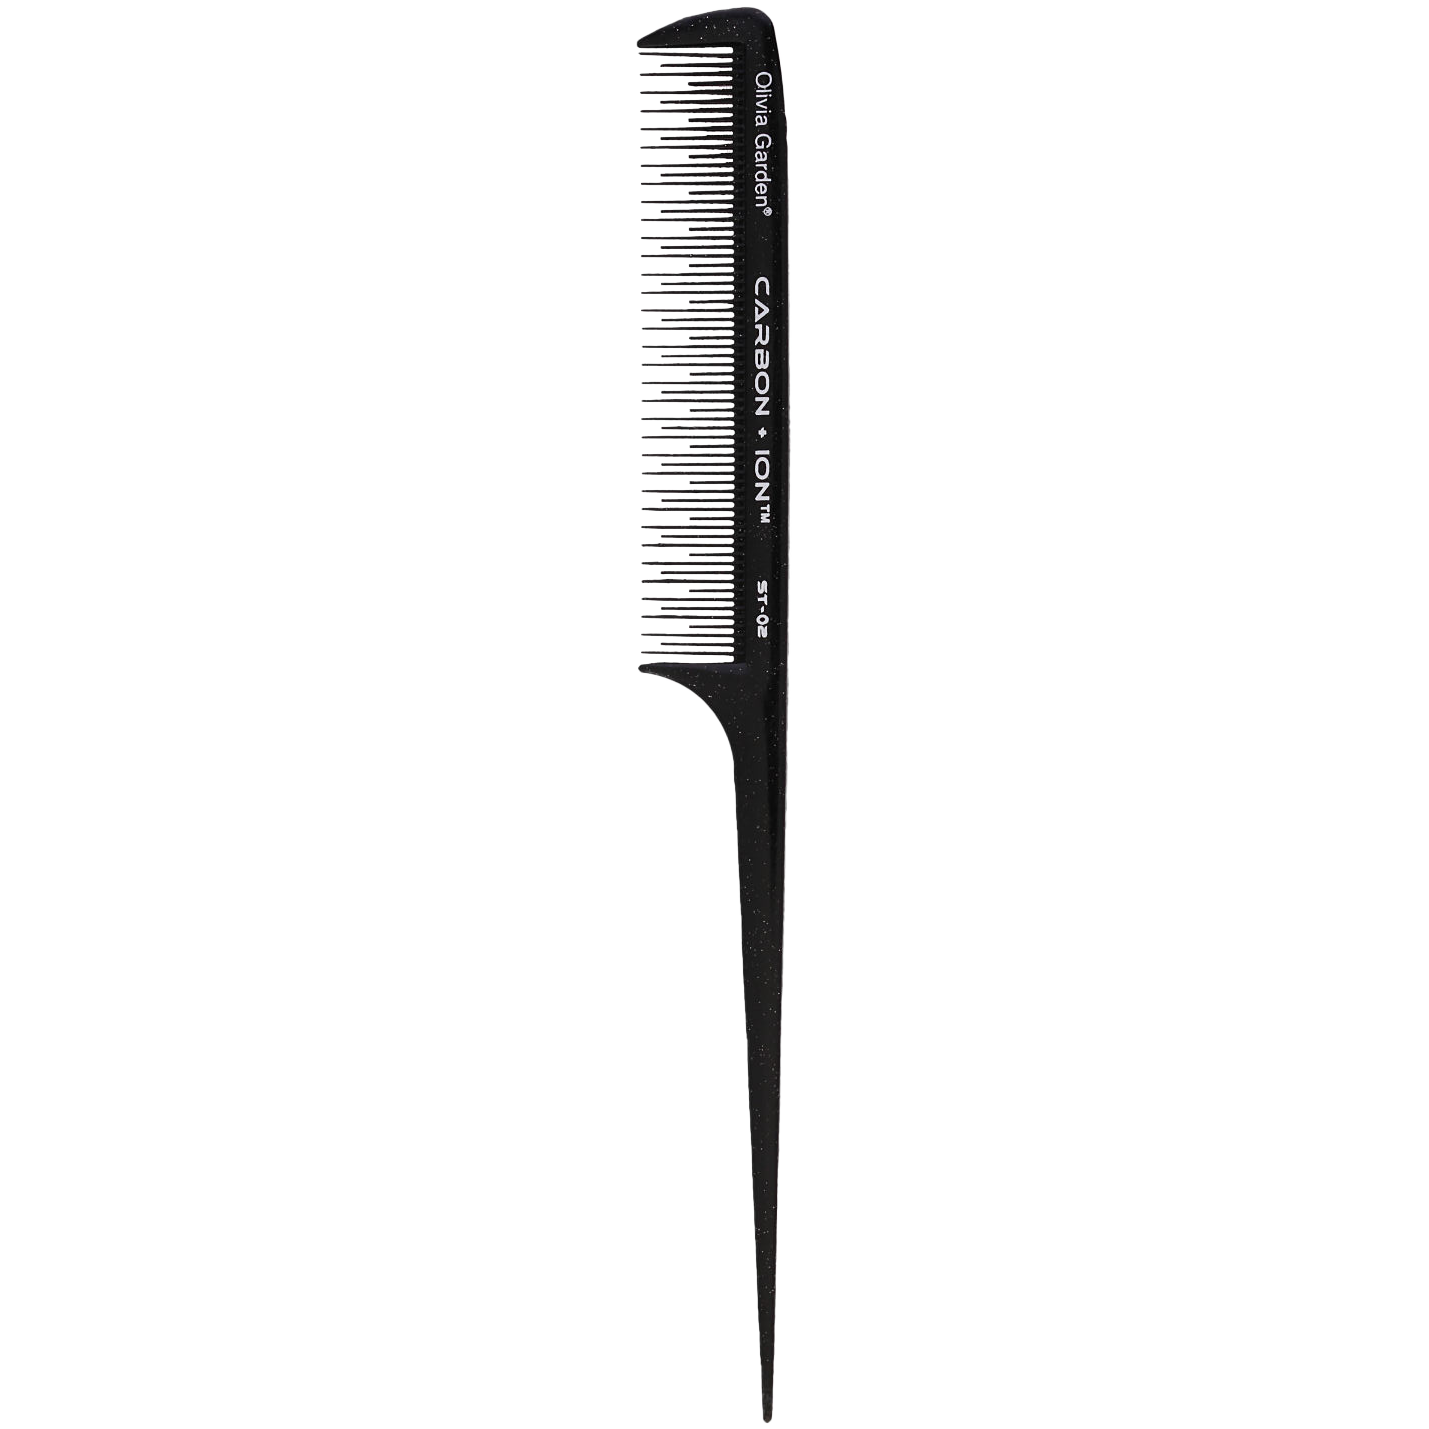 Olivia Garden Carbon Comb ST-2 расческа для волос ST-2, 1 шт. цена и фото